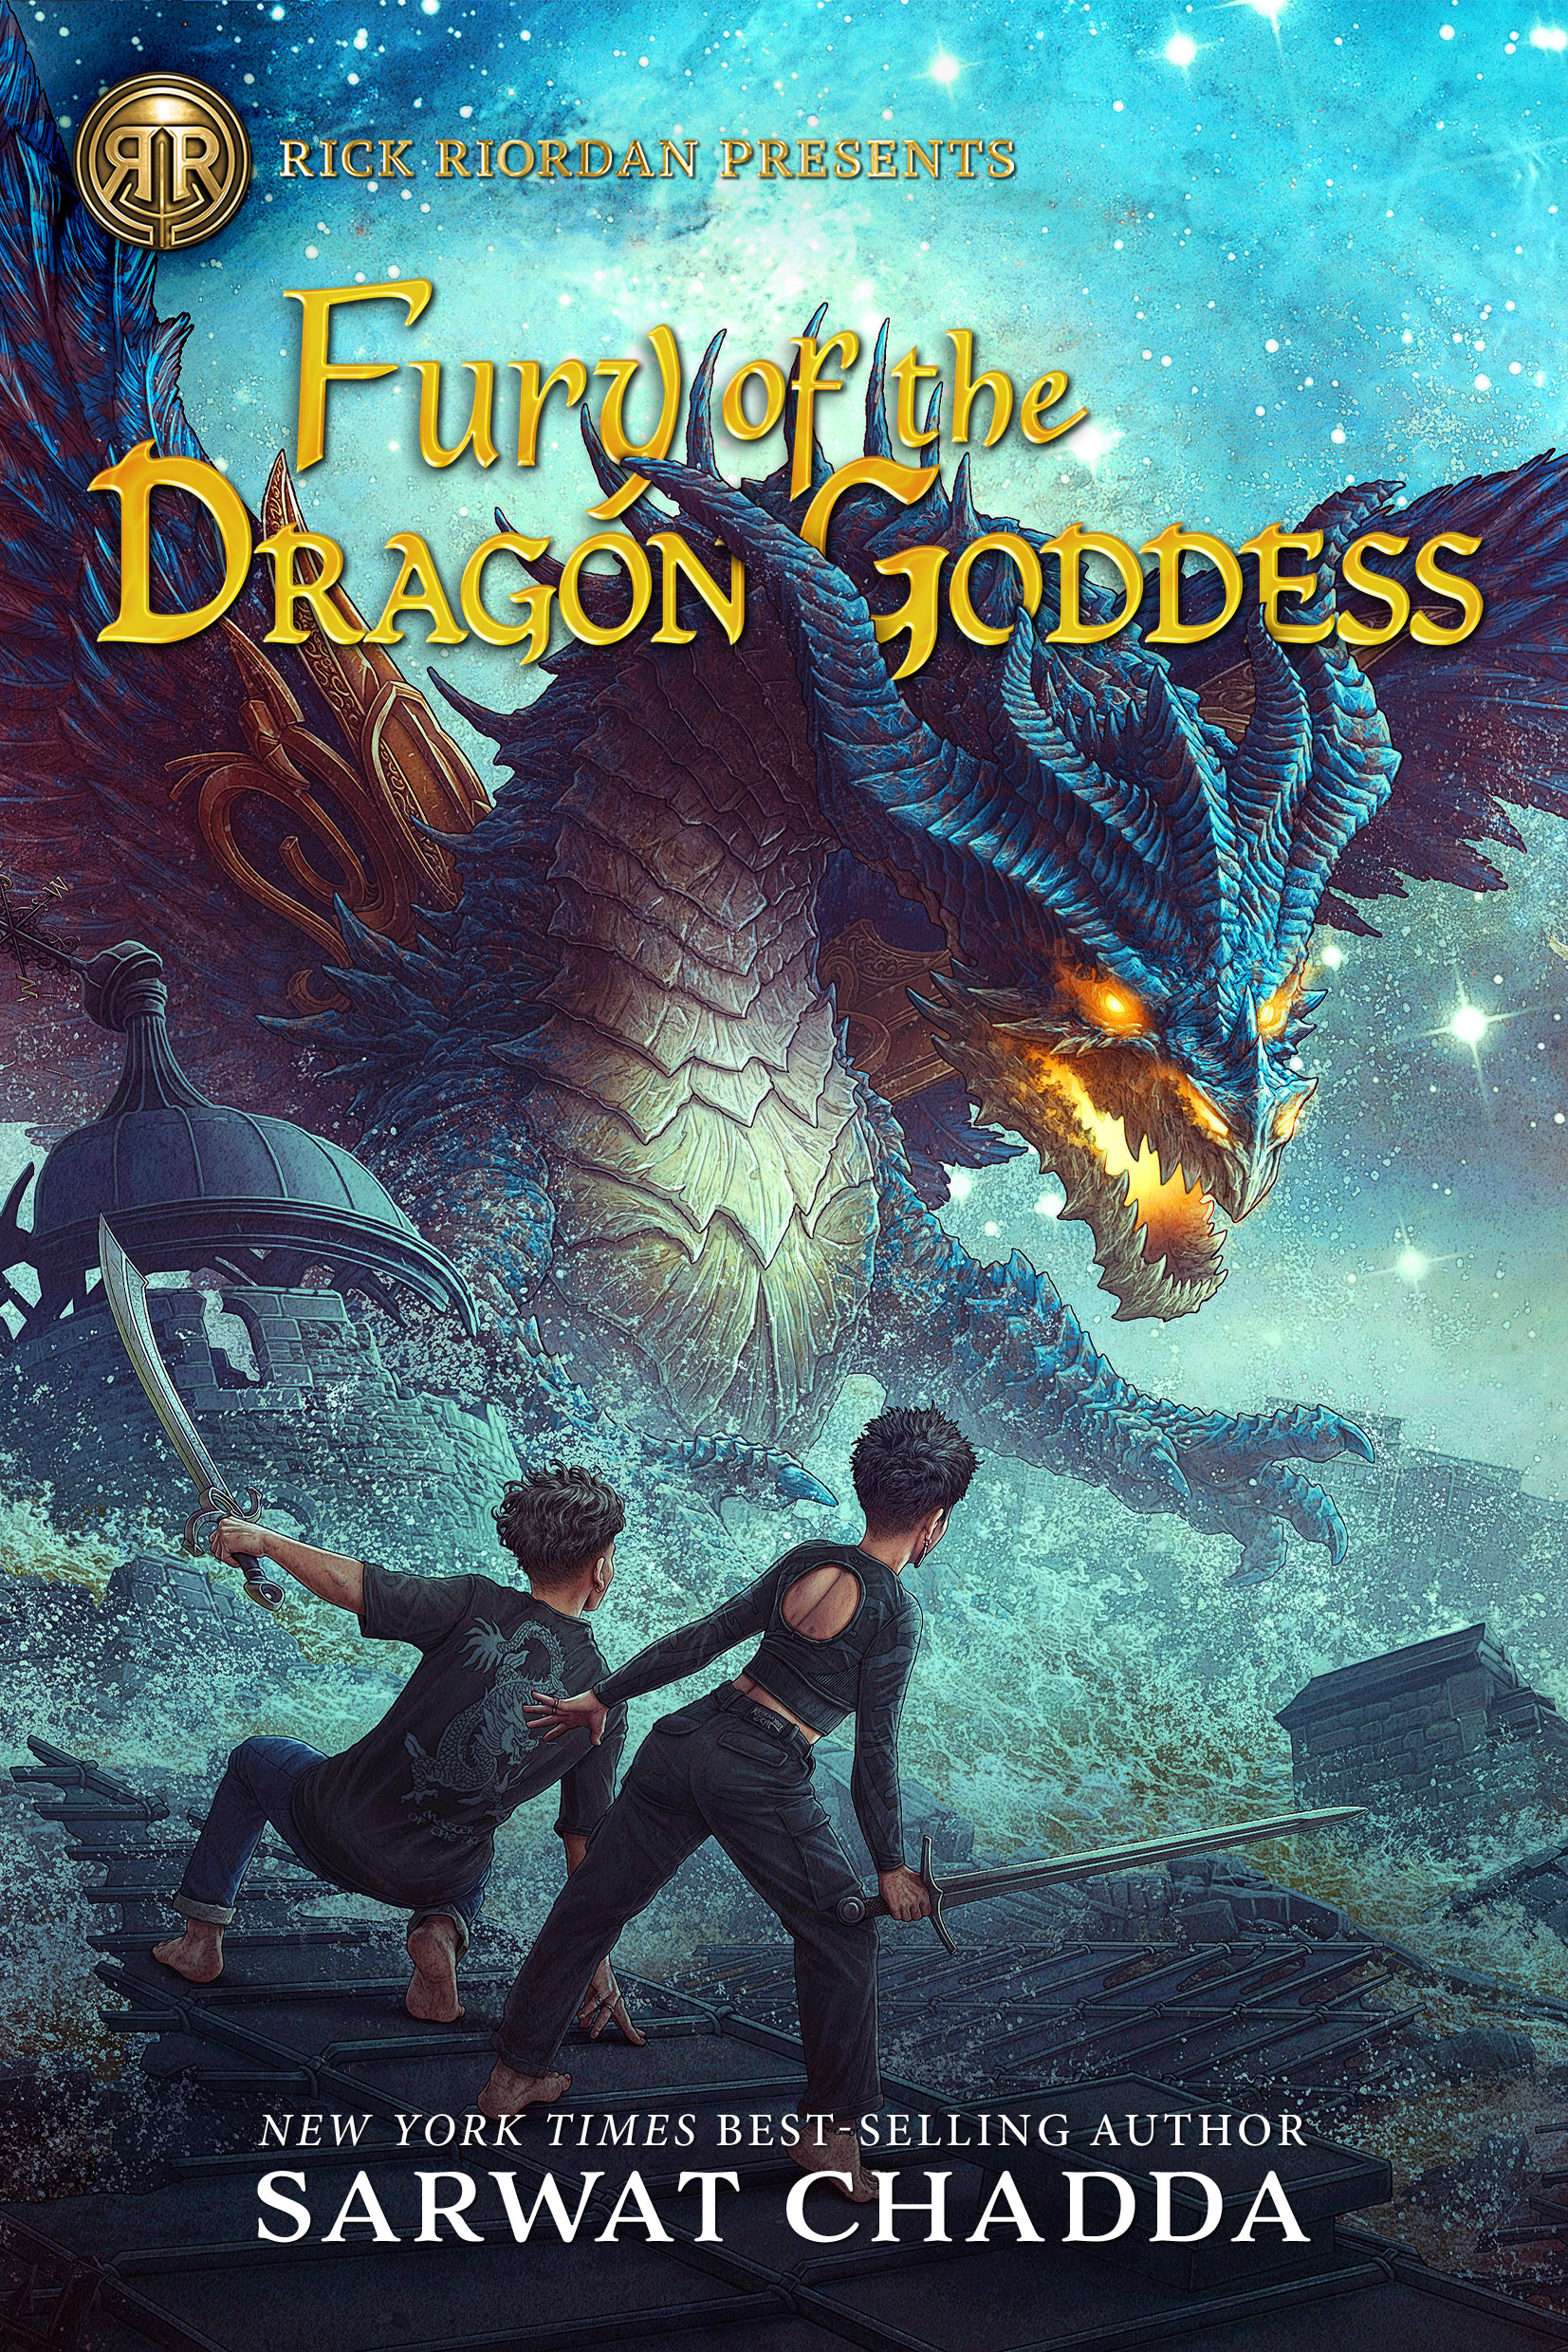 The Frozen Sea (Dragon Games #2) Audiobook